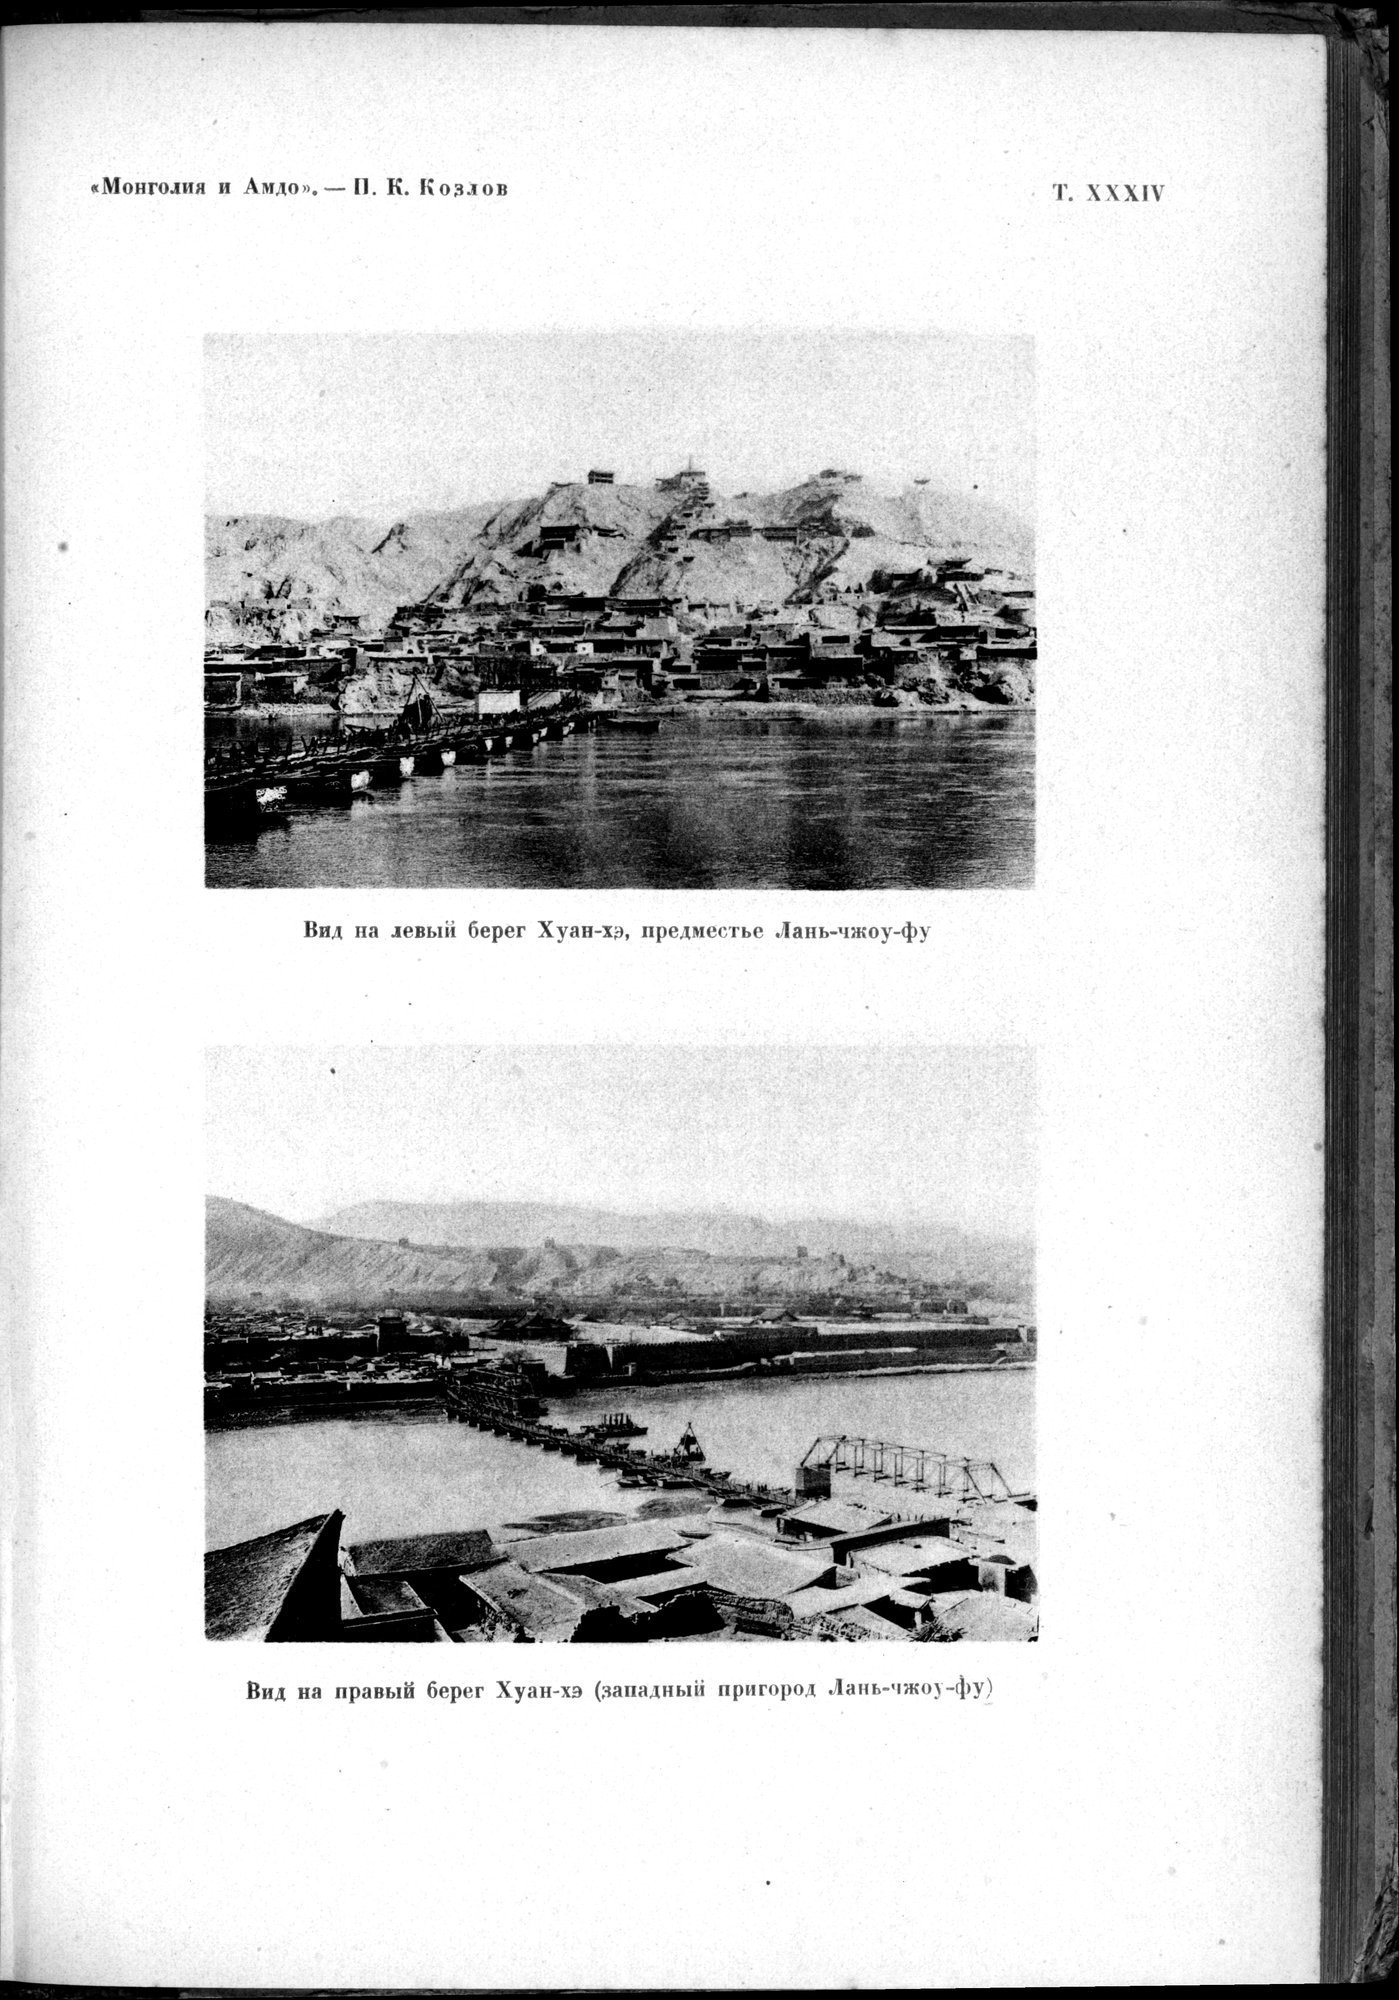 Mongoliya i Amdo i mertby gorod Khara-Khoto : vol.1 / Page 595 (Grayscale High Resolution Image)